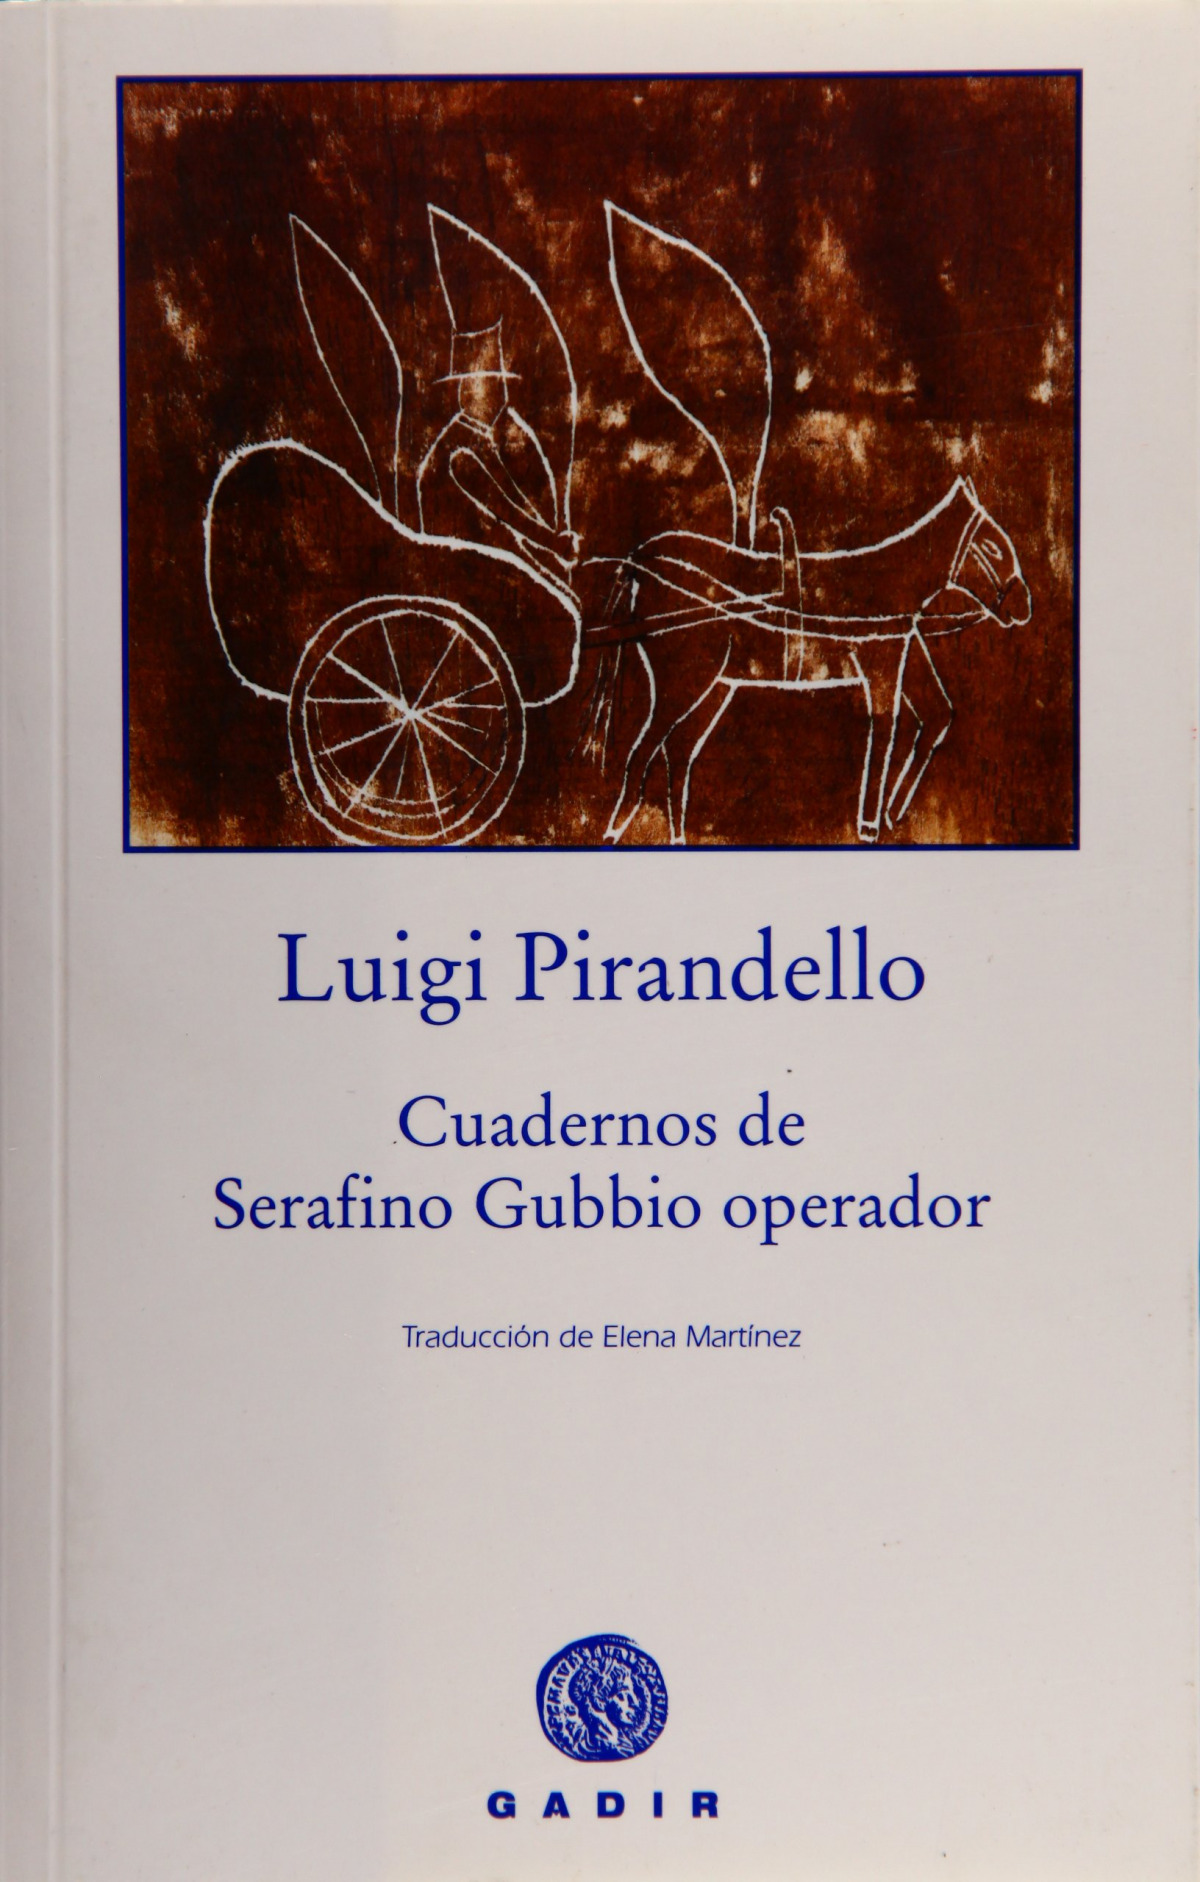 Cuadernos de Serafino Gubbio operador - Pirandello, Luigi